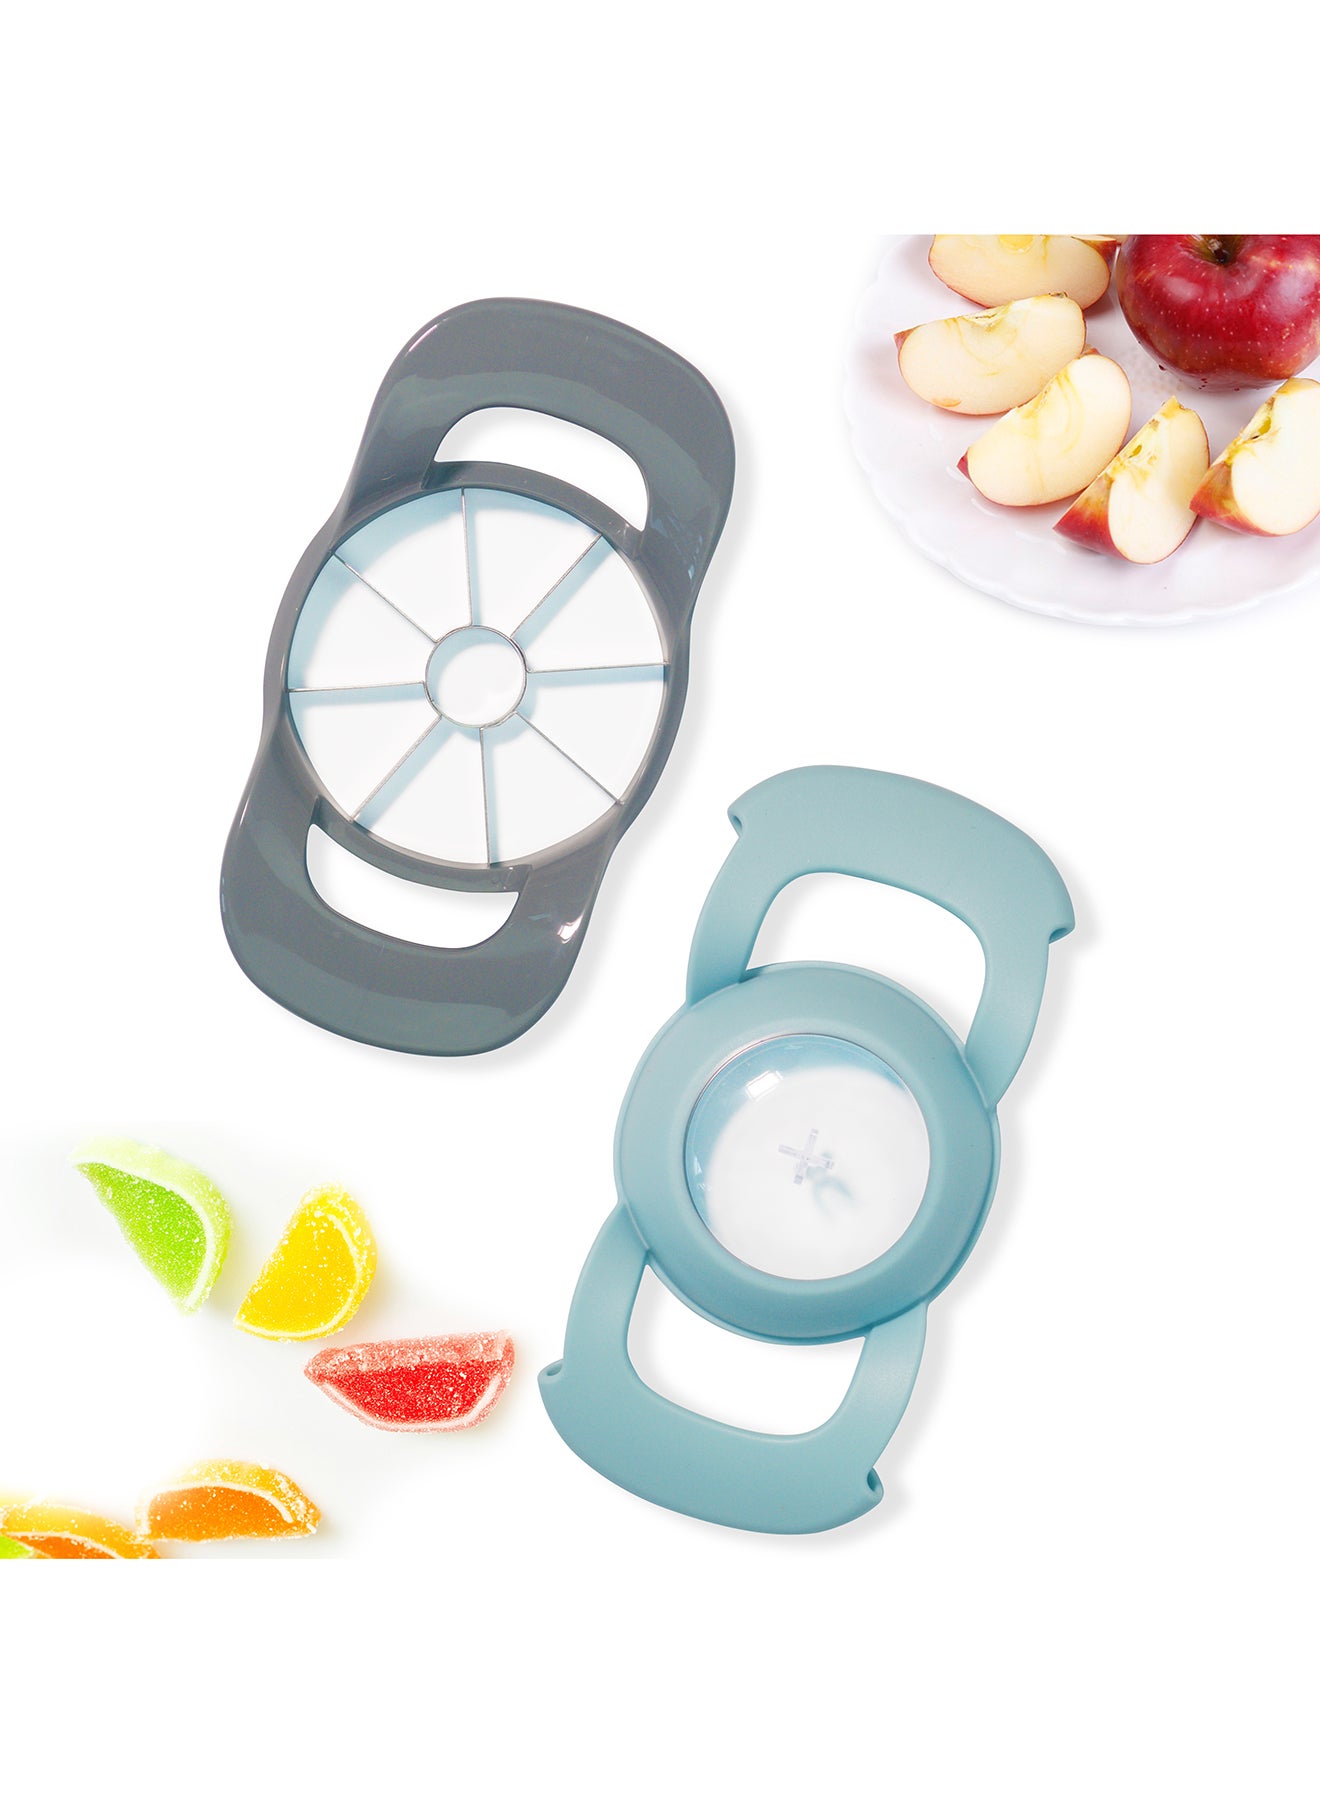 Apple Corer - Kitchen Accessories - Kitchen Tool - Fruits - Light Blue/Grey 